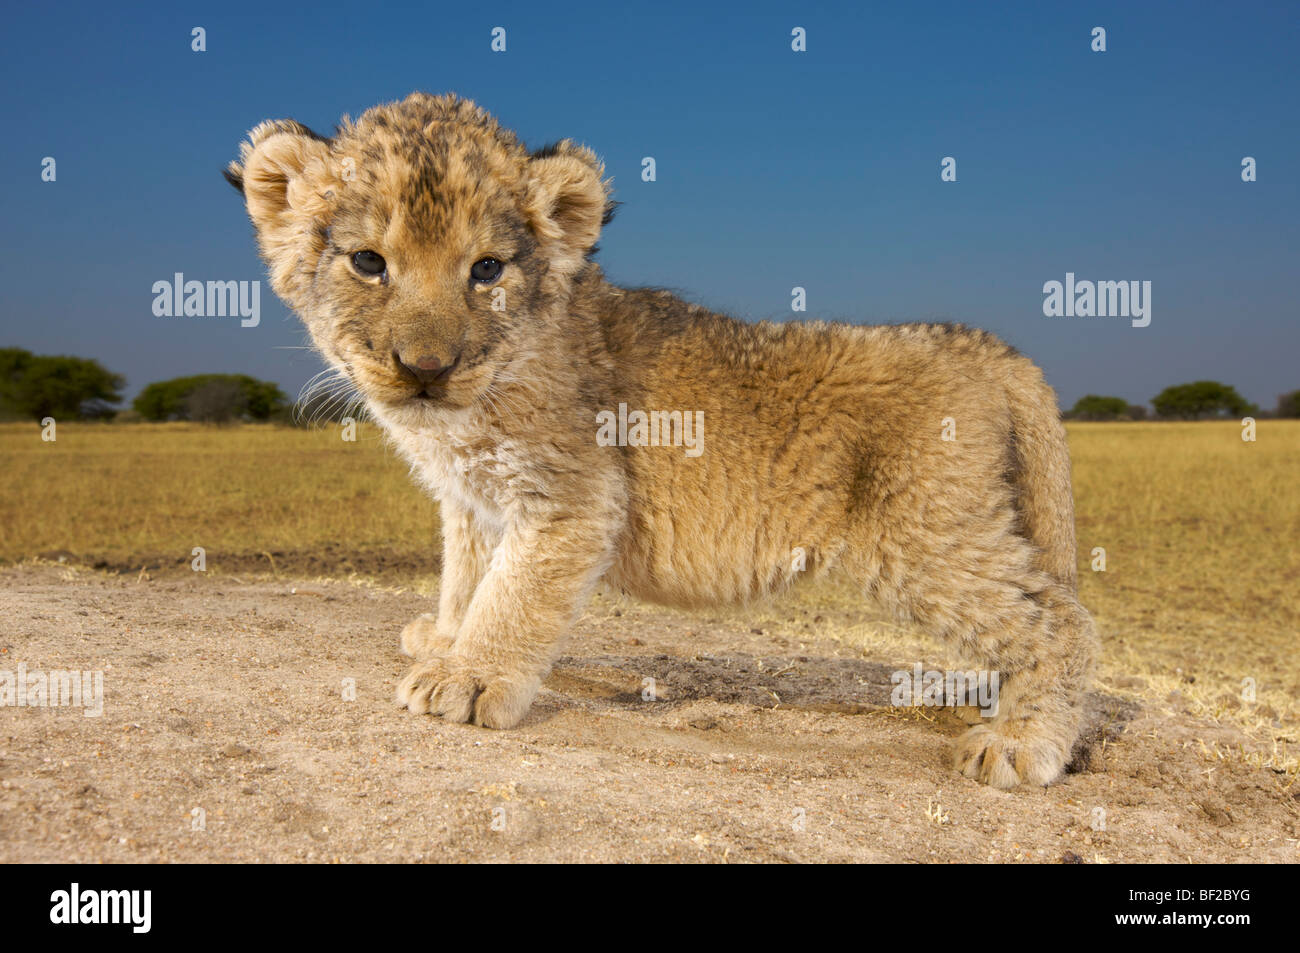 View of young lion cub (Panthera leo), looking at camera, Namibia. Stock Photo